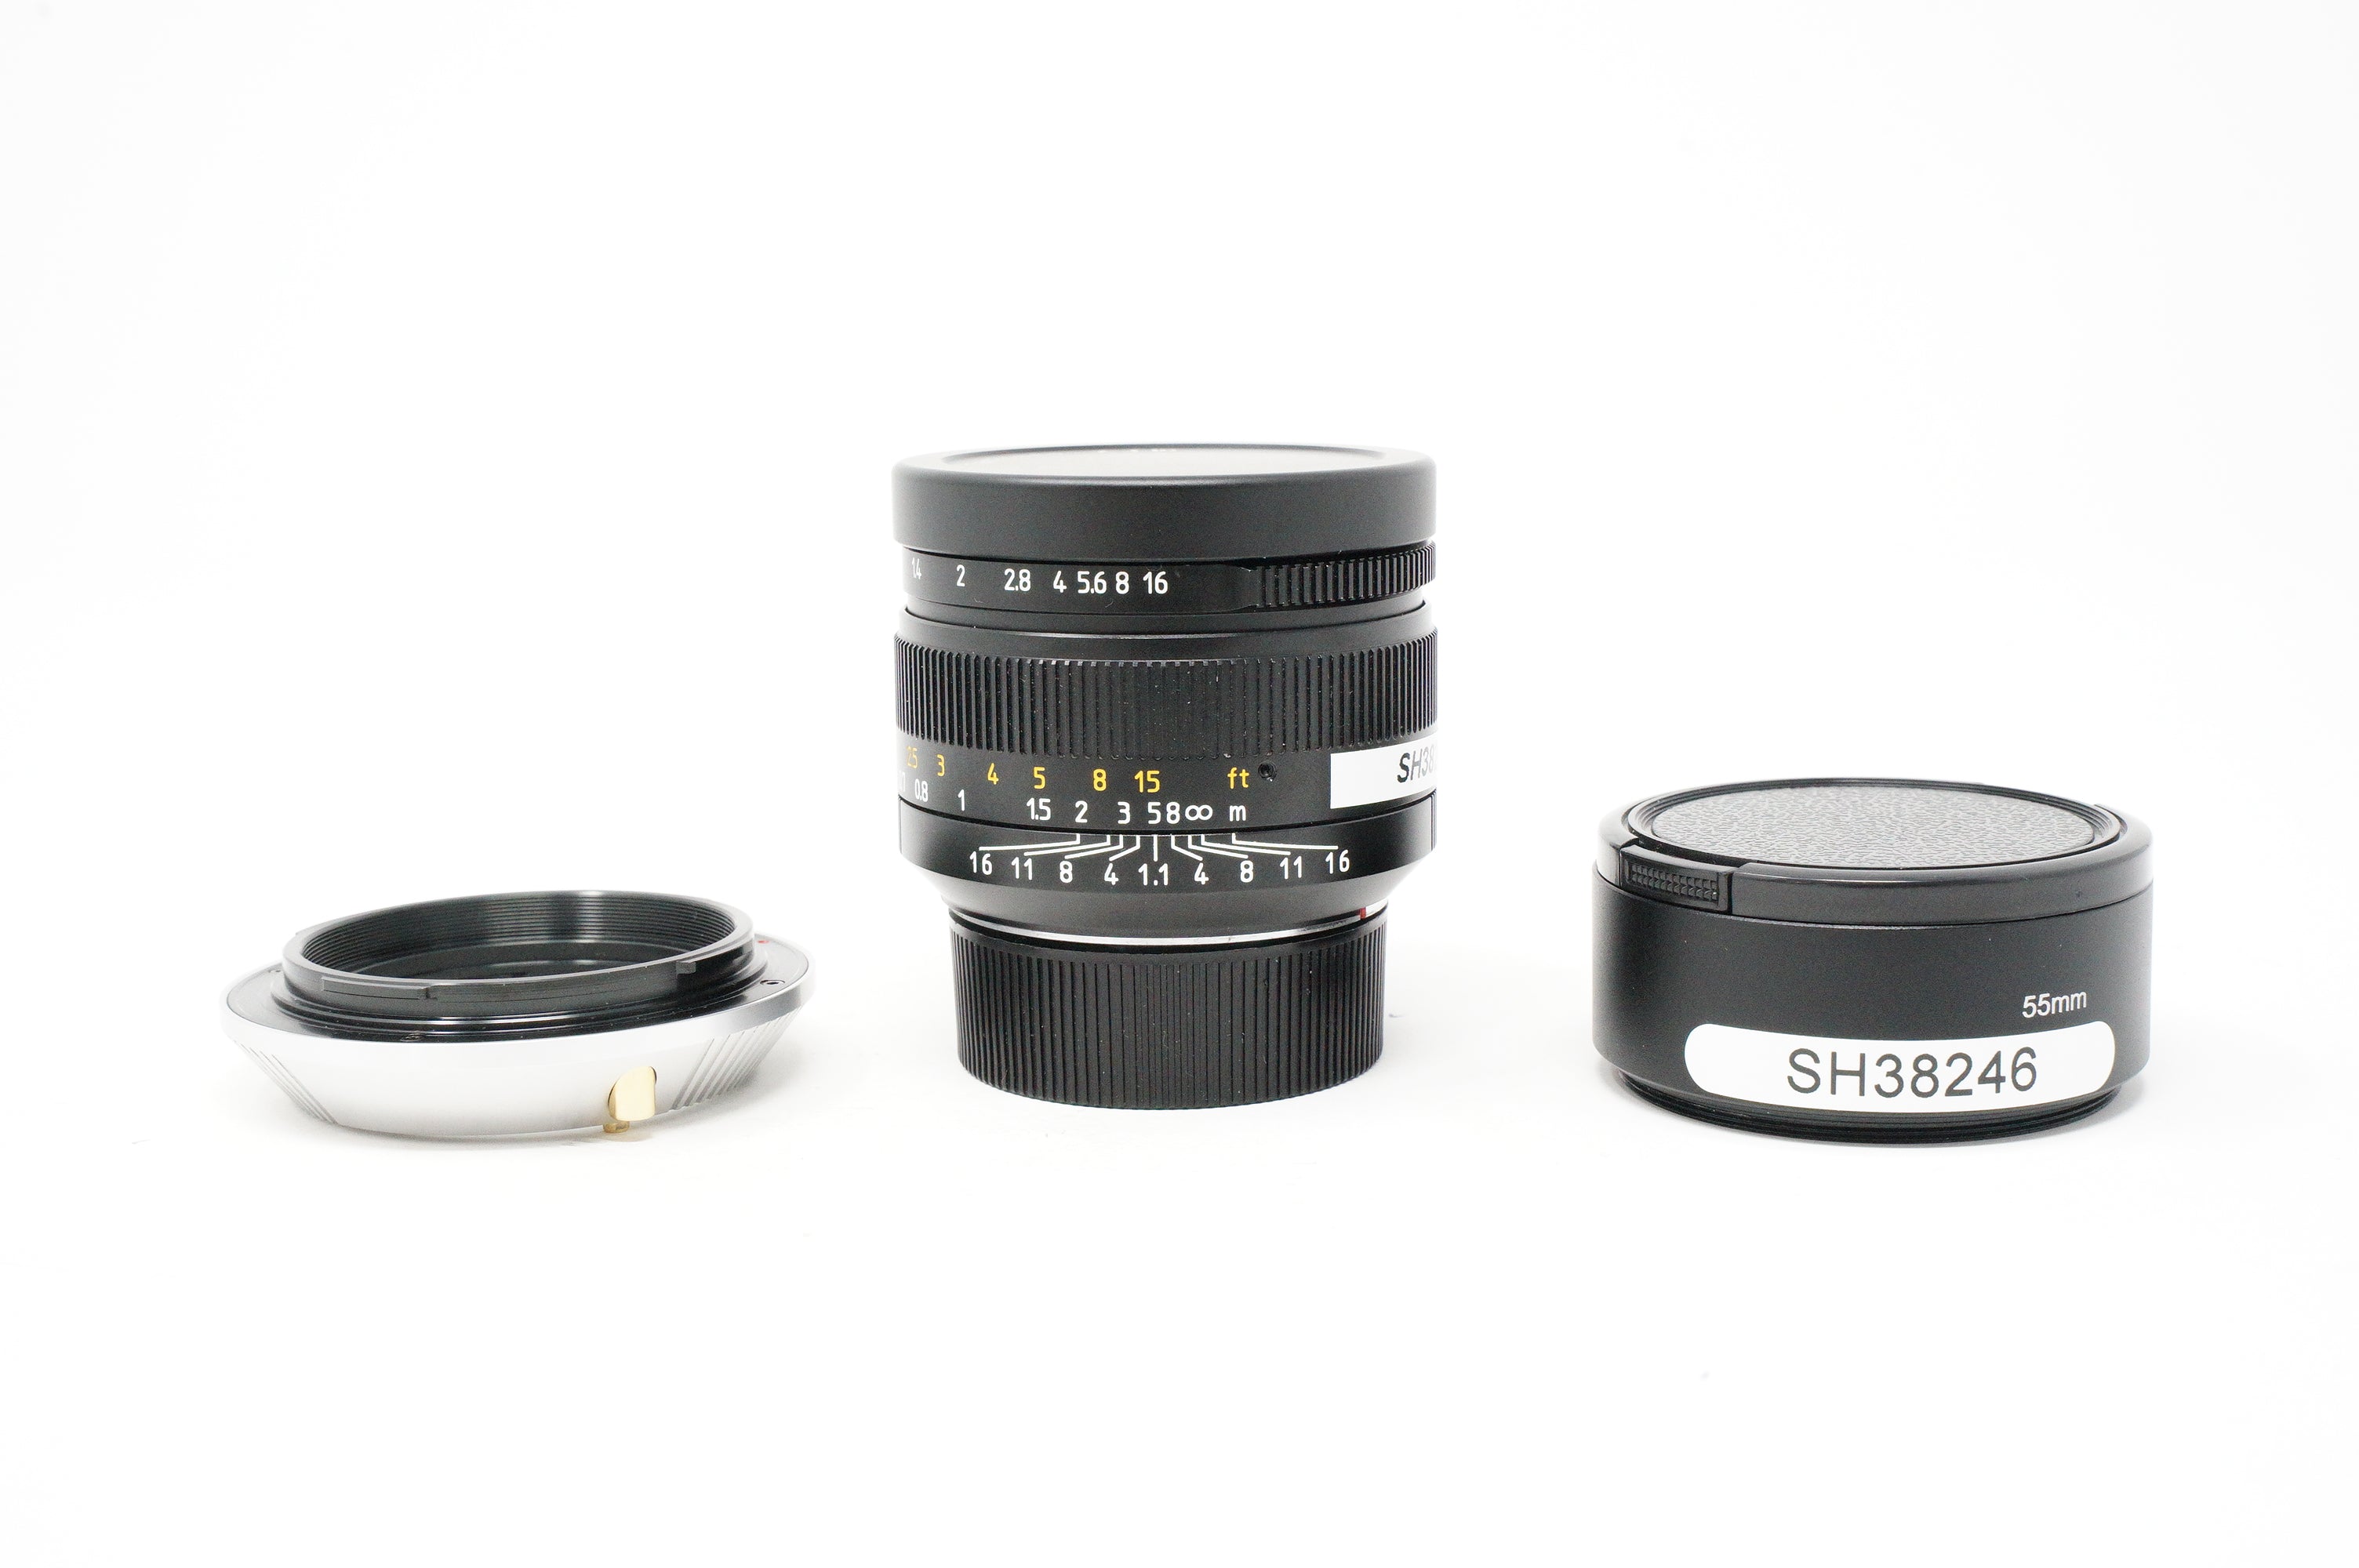 Product Image of Used 7 Artizan DJ-Optical 50mm F1.1 in Leica M mount with Nikon Z adaptor(SH38246)